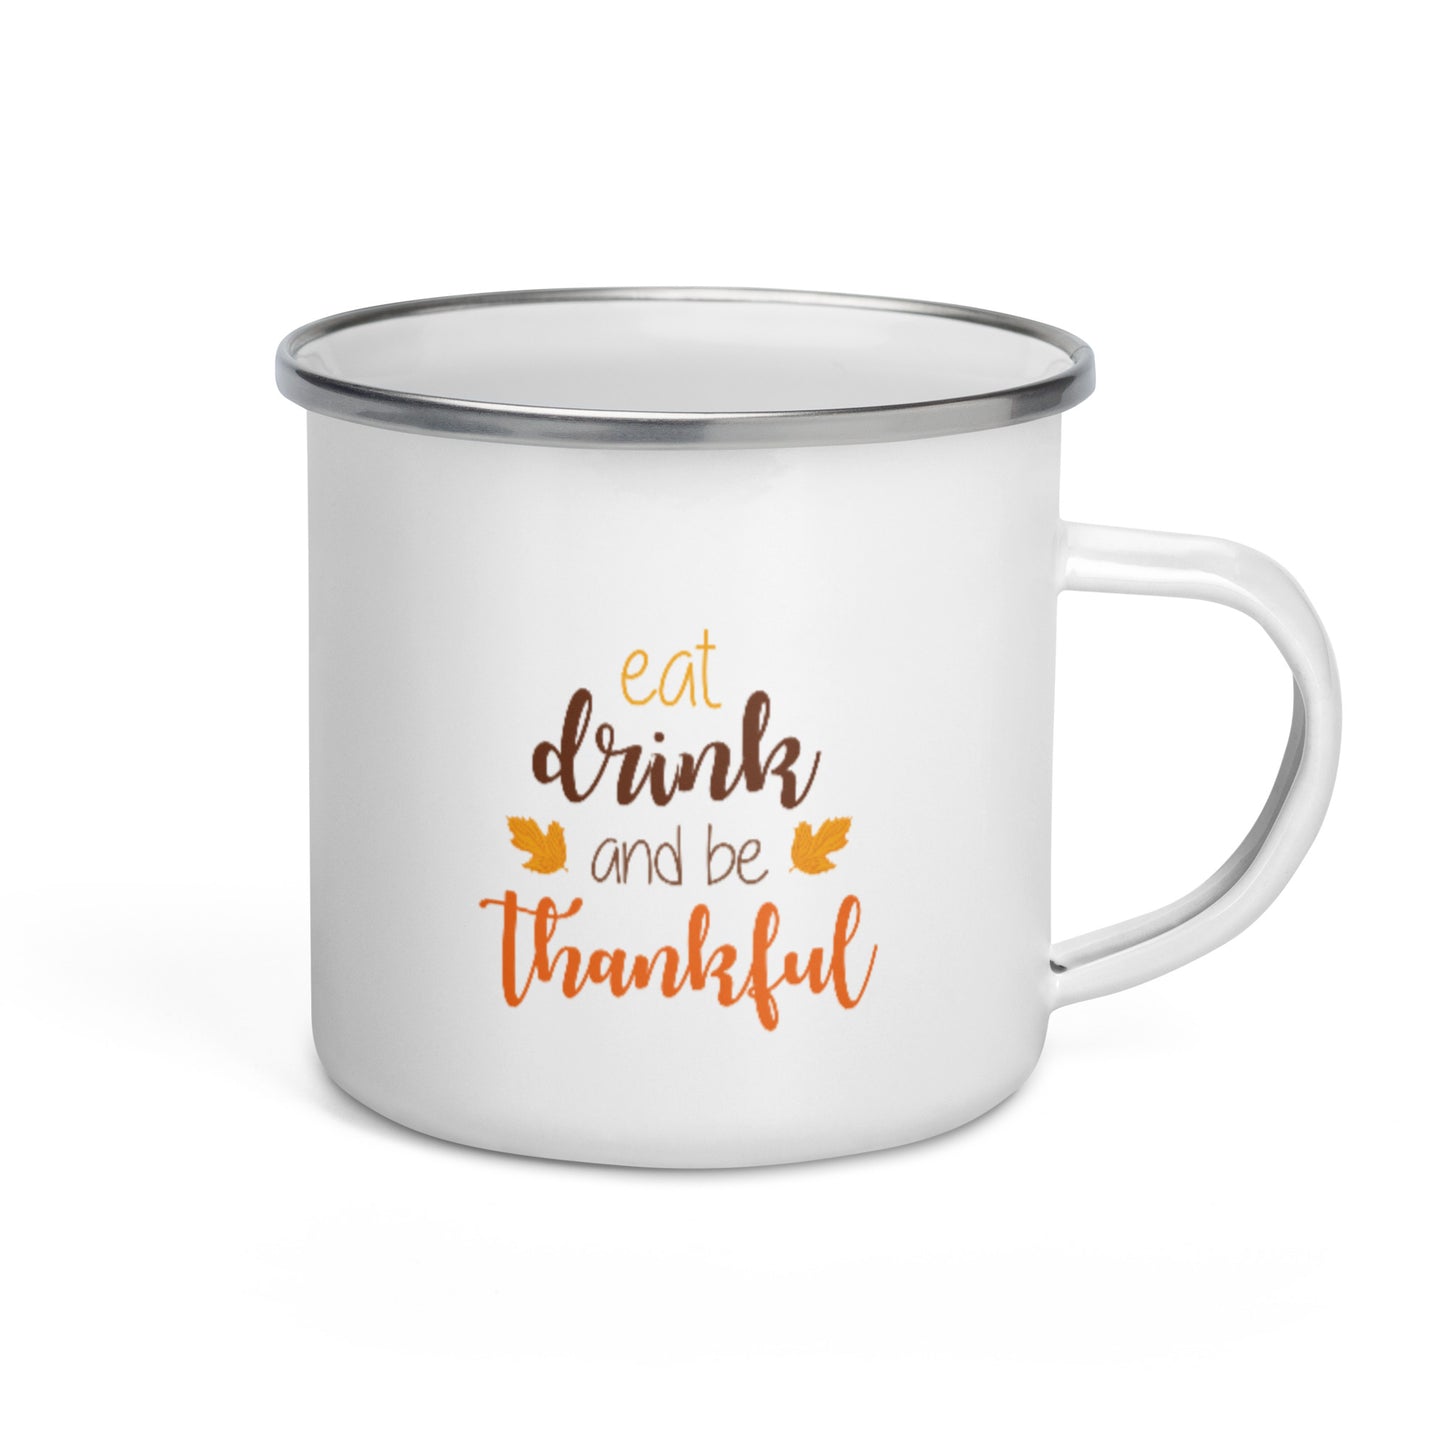 Eat Drink and be Thankful Enamel Mug